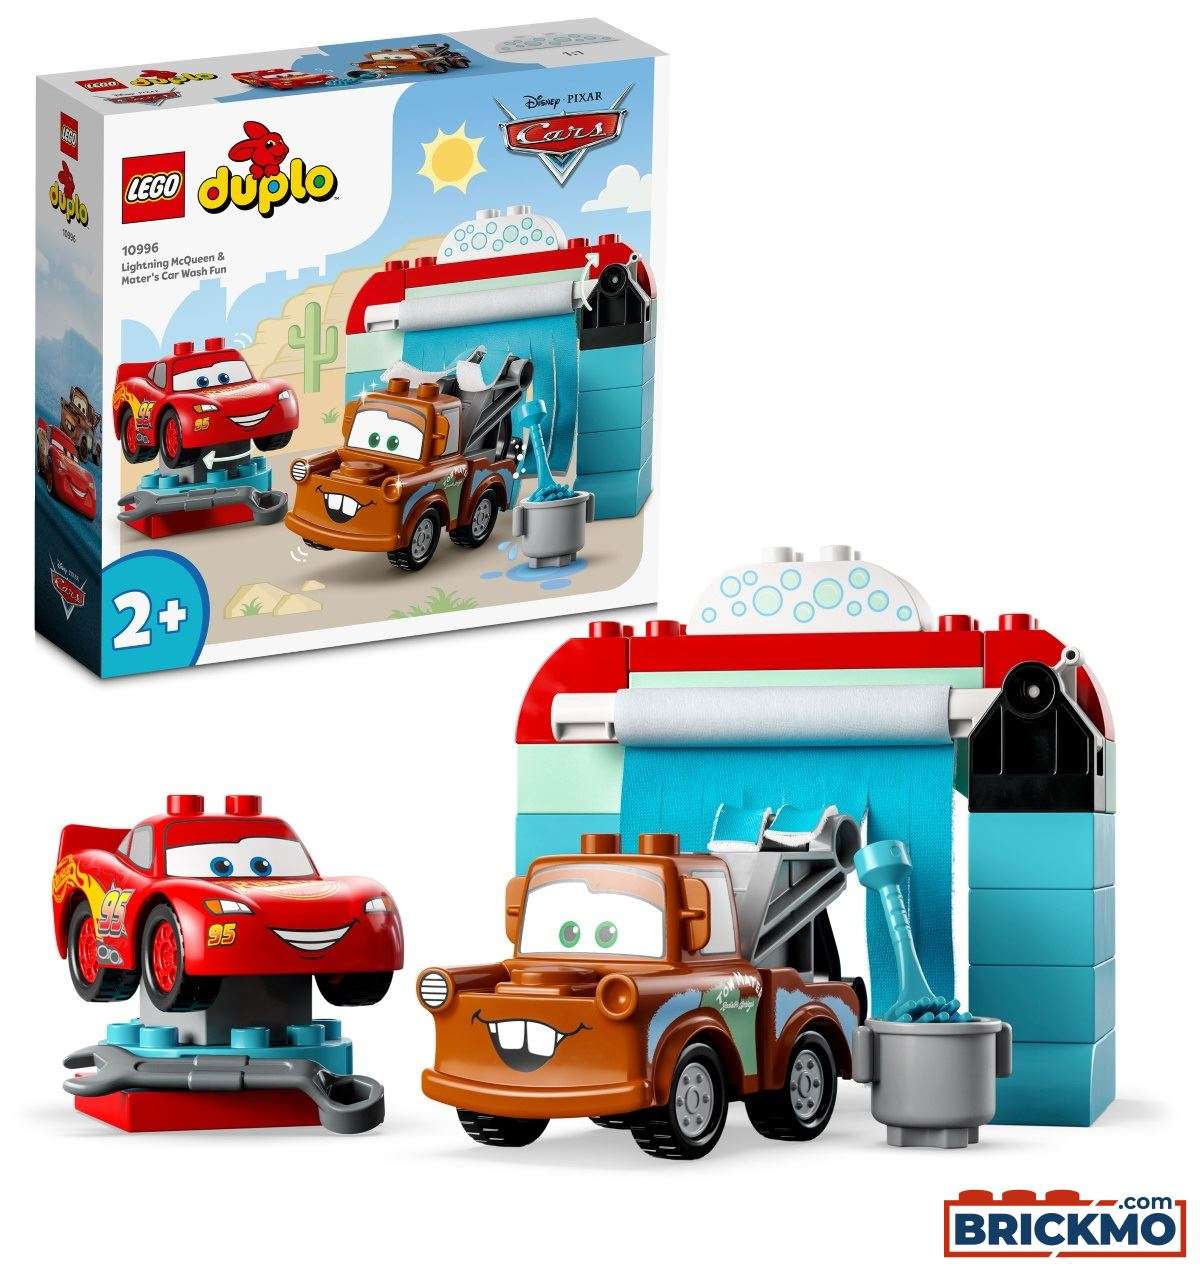 LEGO Duplo 10996 Lightning McQueen &amp; Mater&#039;s Car Wash Fun 10996